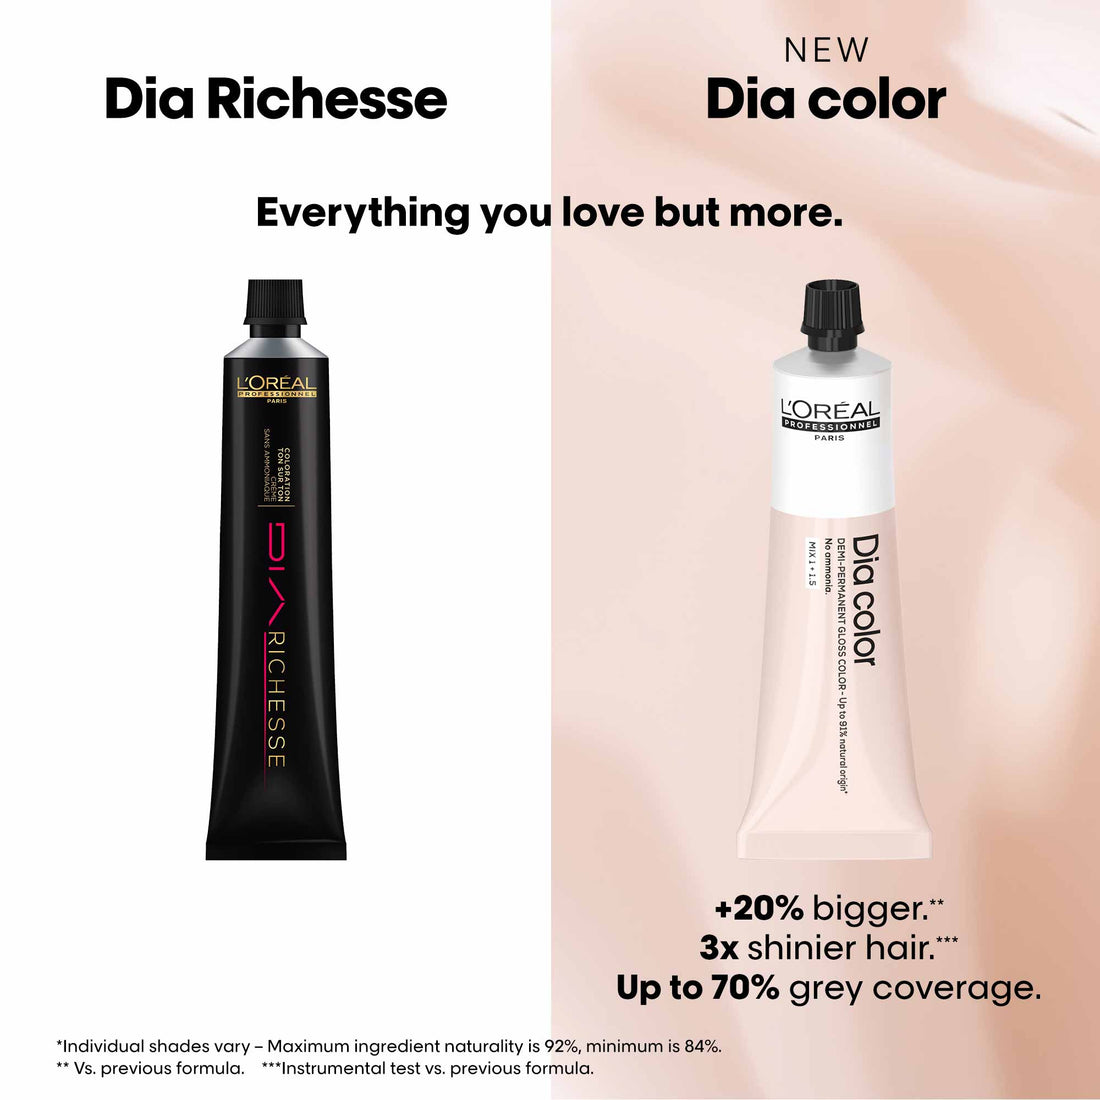 Dia Color replaces Dia Richesse